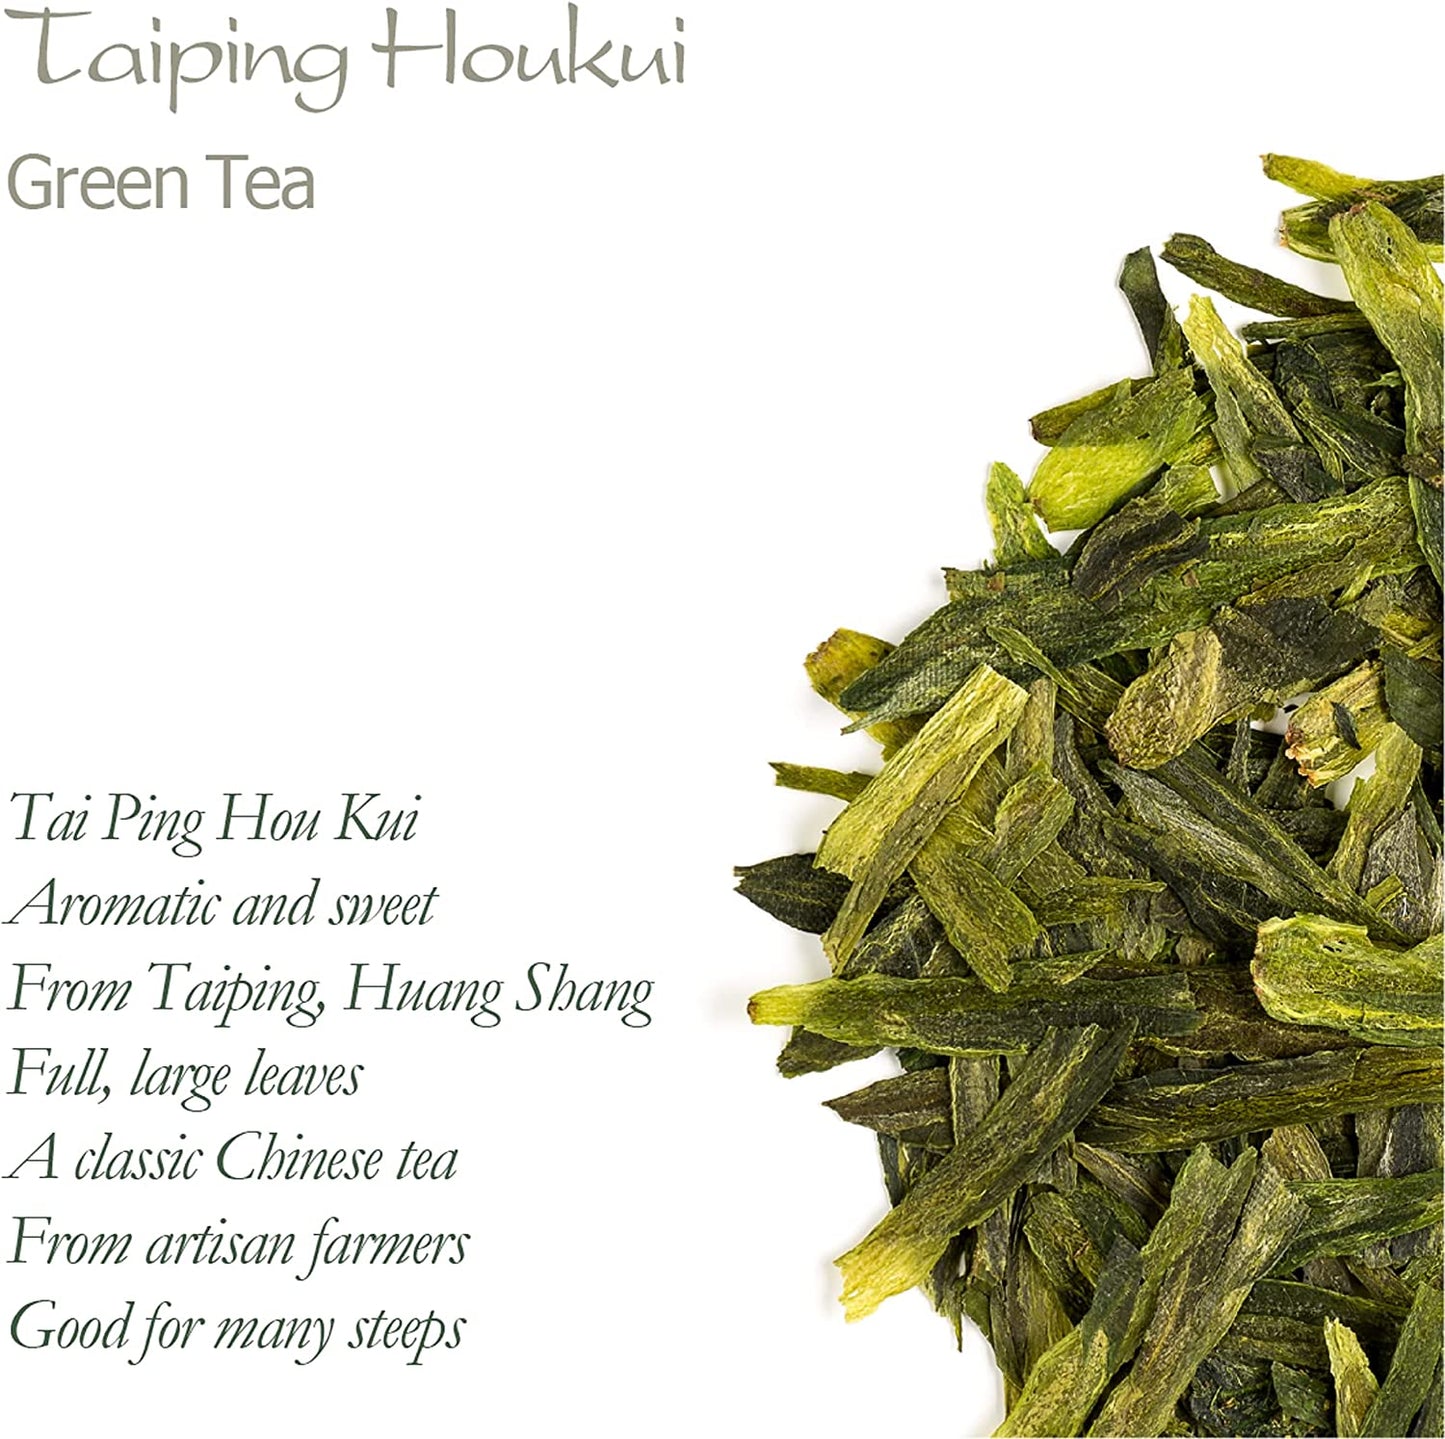 The Large, Beautiful Leaves of Taiping Houkui (太平猴魁）250g Green Tea